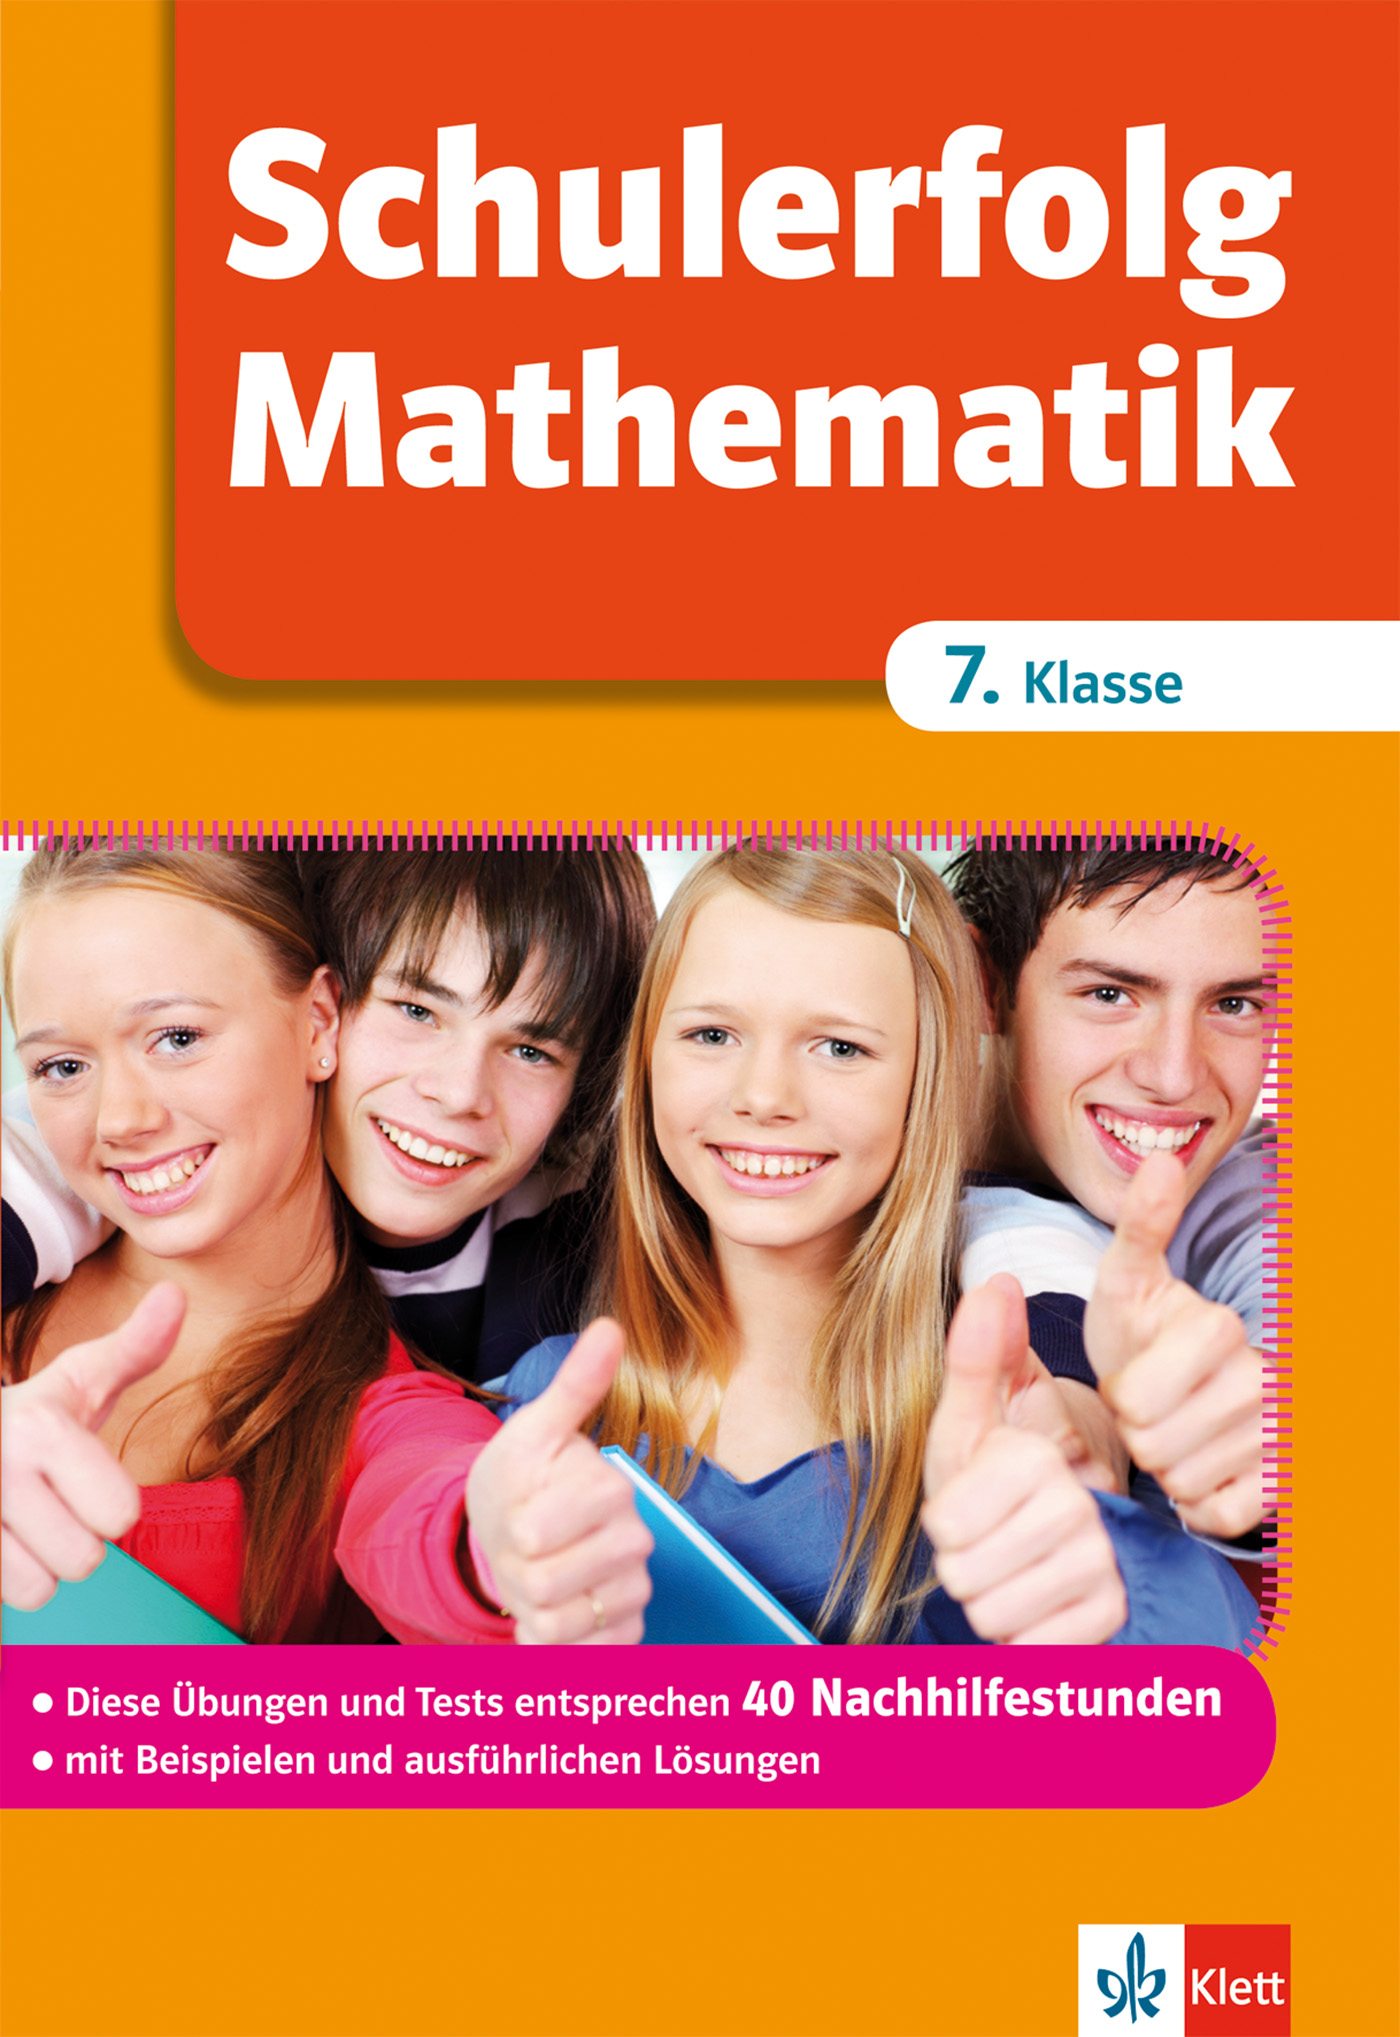 Klett Schulerfolg Mathematik 7. Klasse